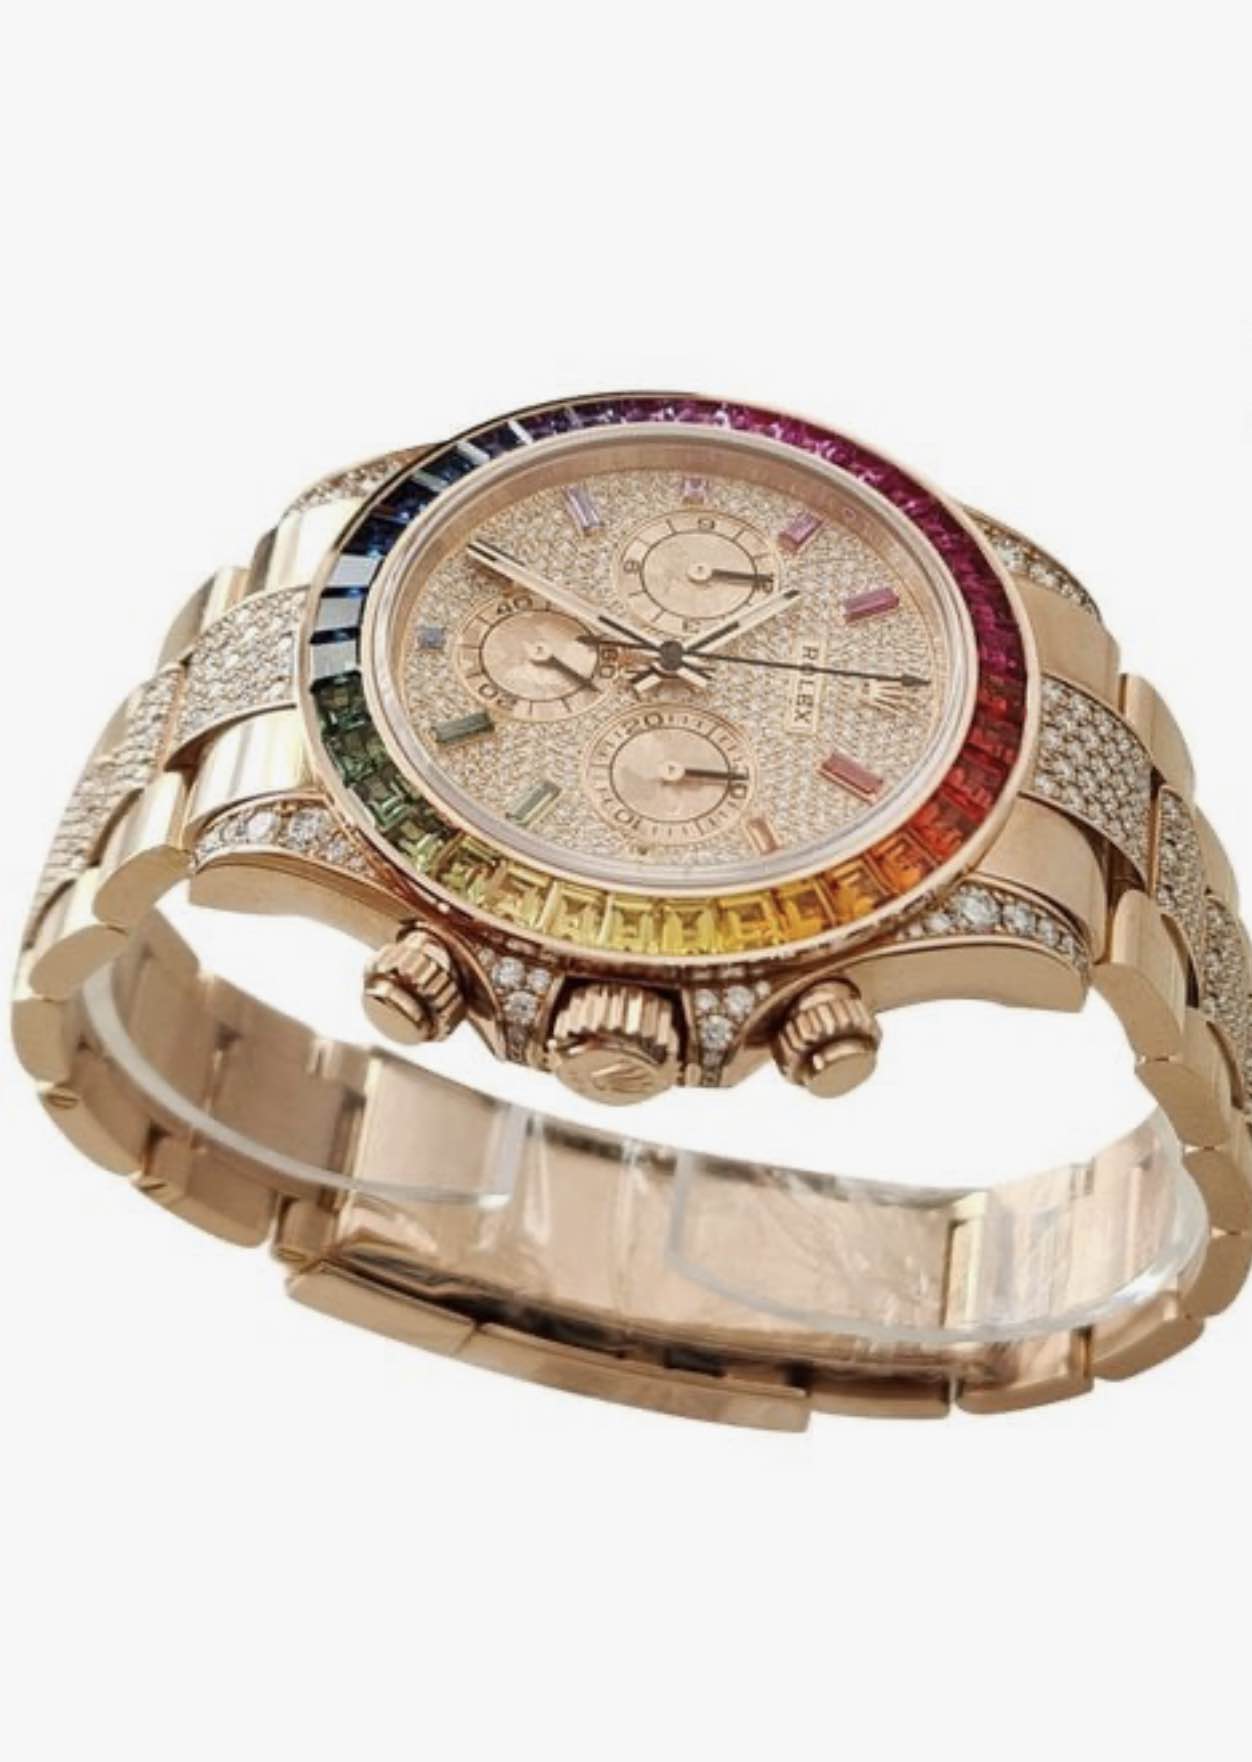 Rolex Daytona Watch - 2